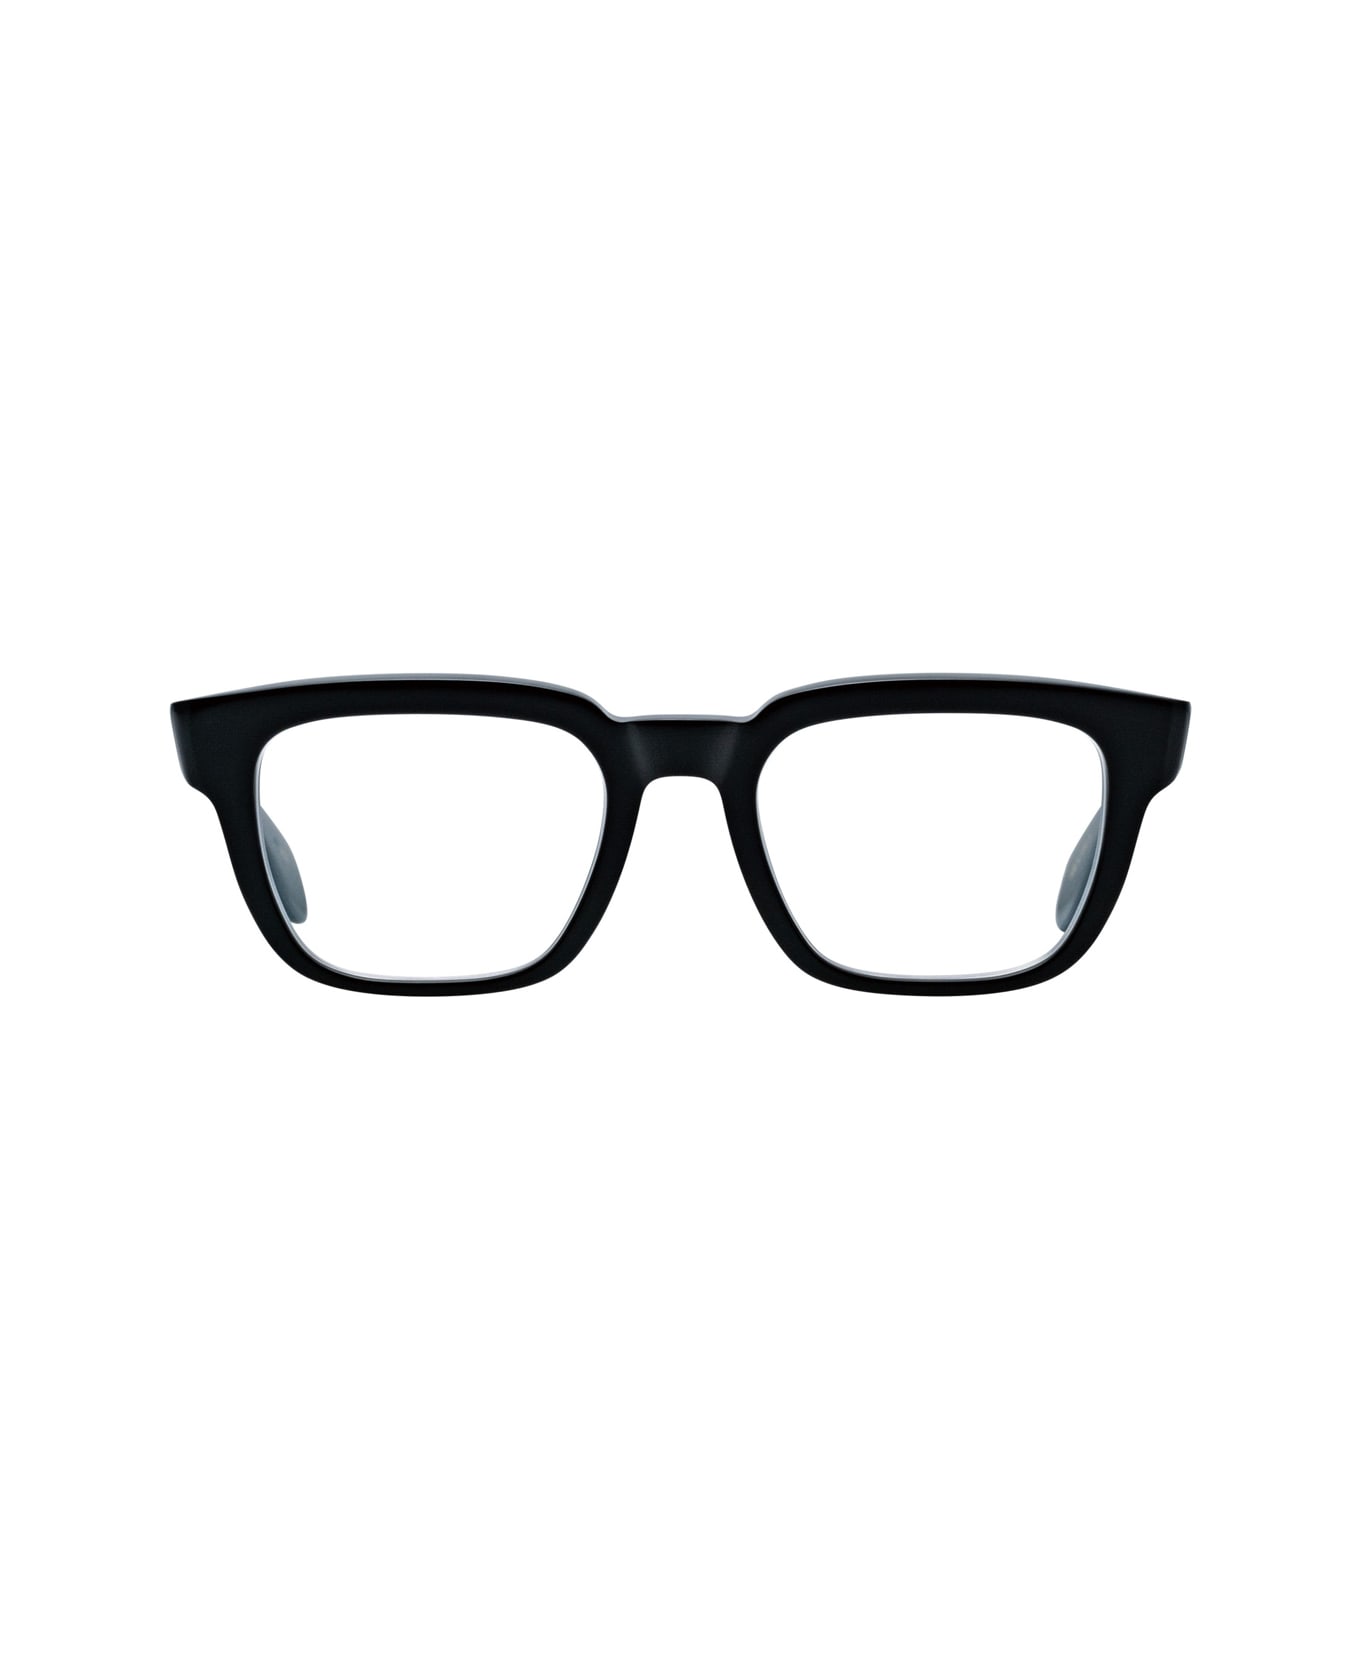 Masunaga Kk 100 19 Glasses - Nero